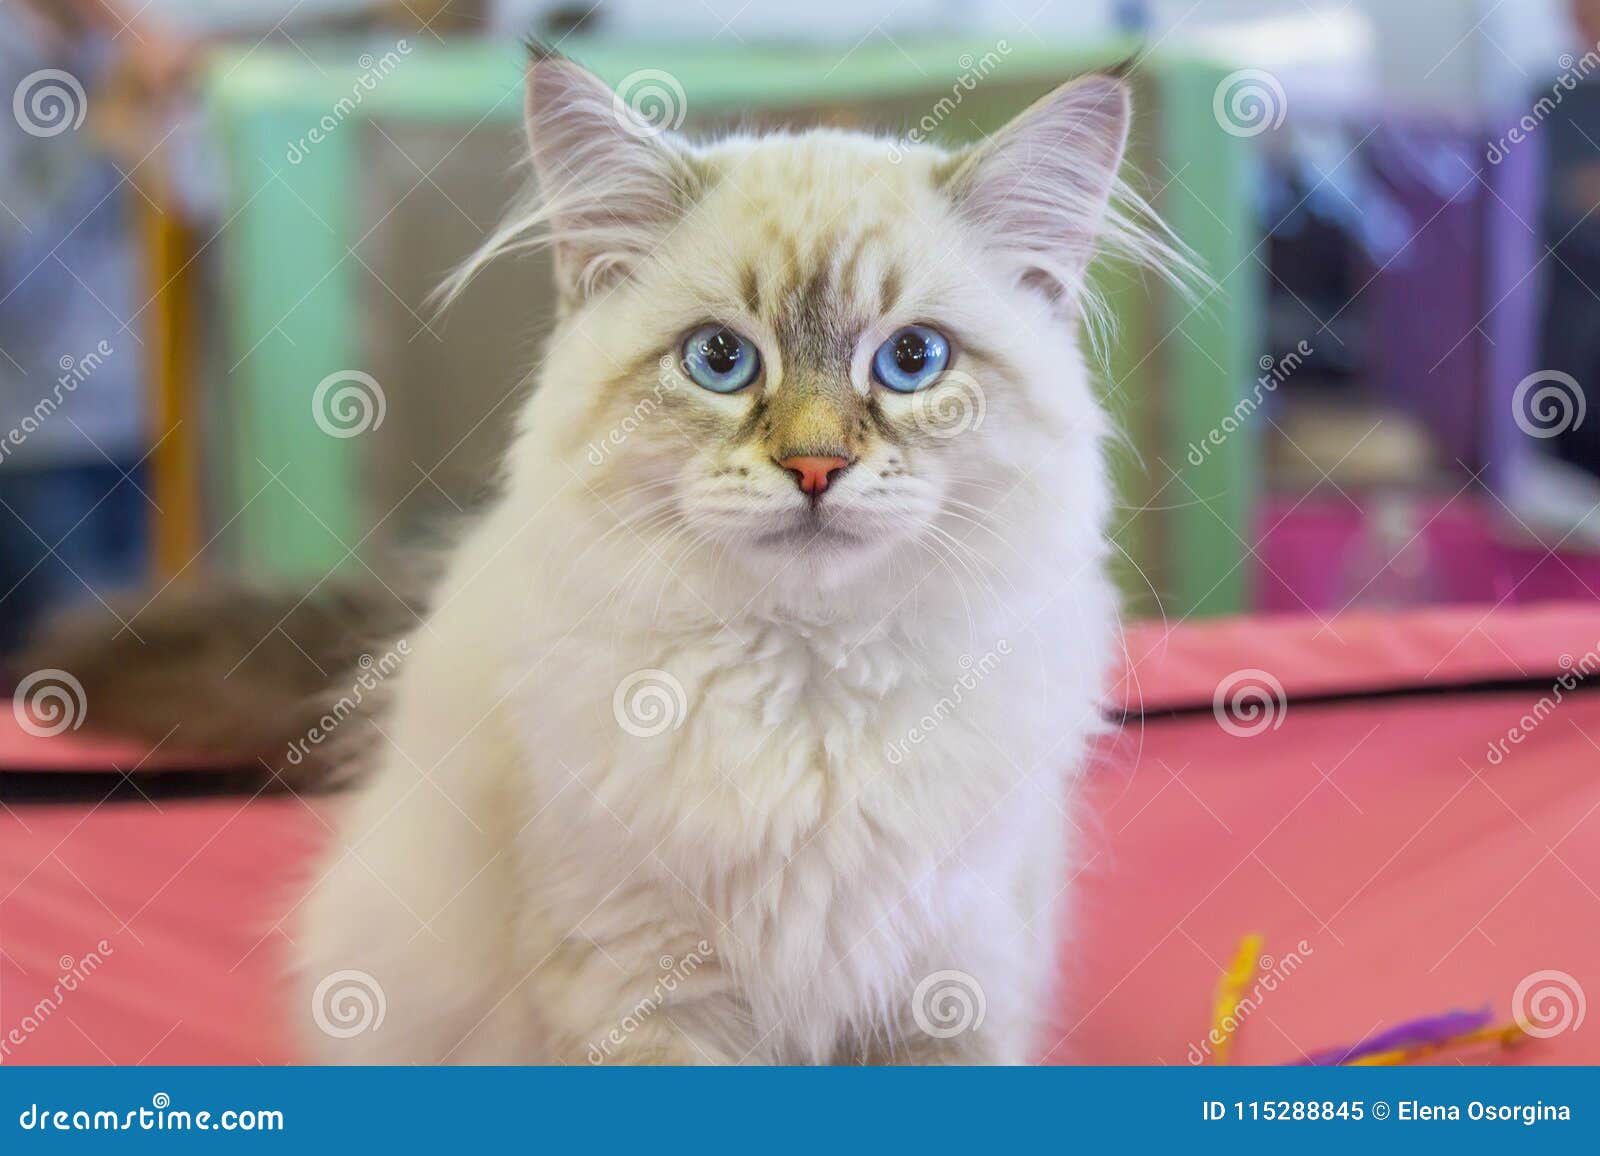 Neva Masquerade Kitten Of Siberian Breed Stock Image Image Of Face Looking 115288845